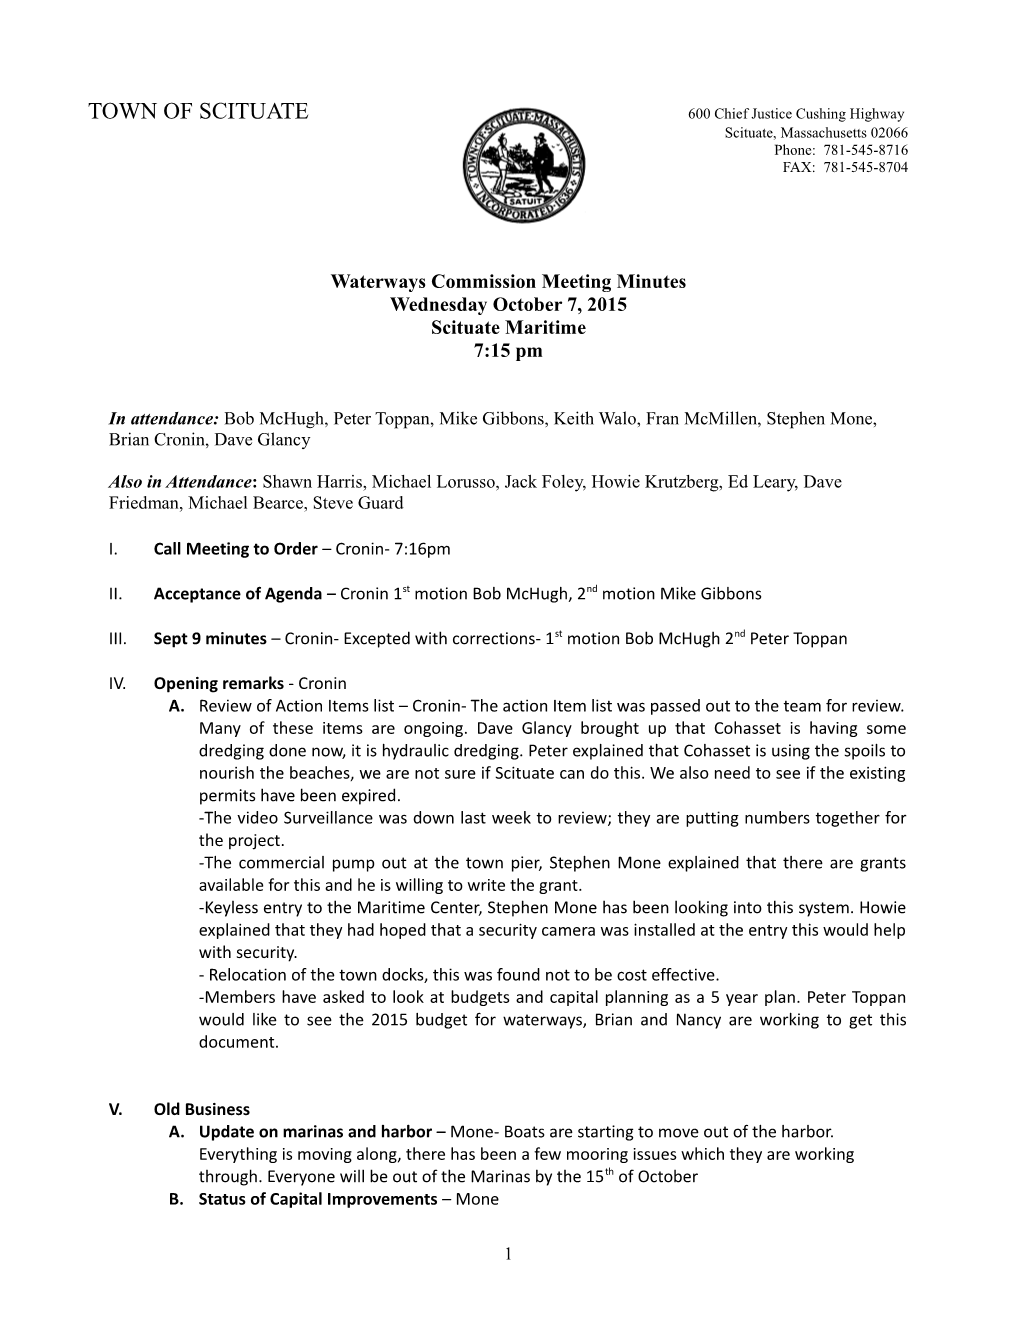 Waterways Commission Meeting Minutes